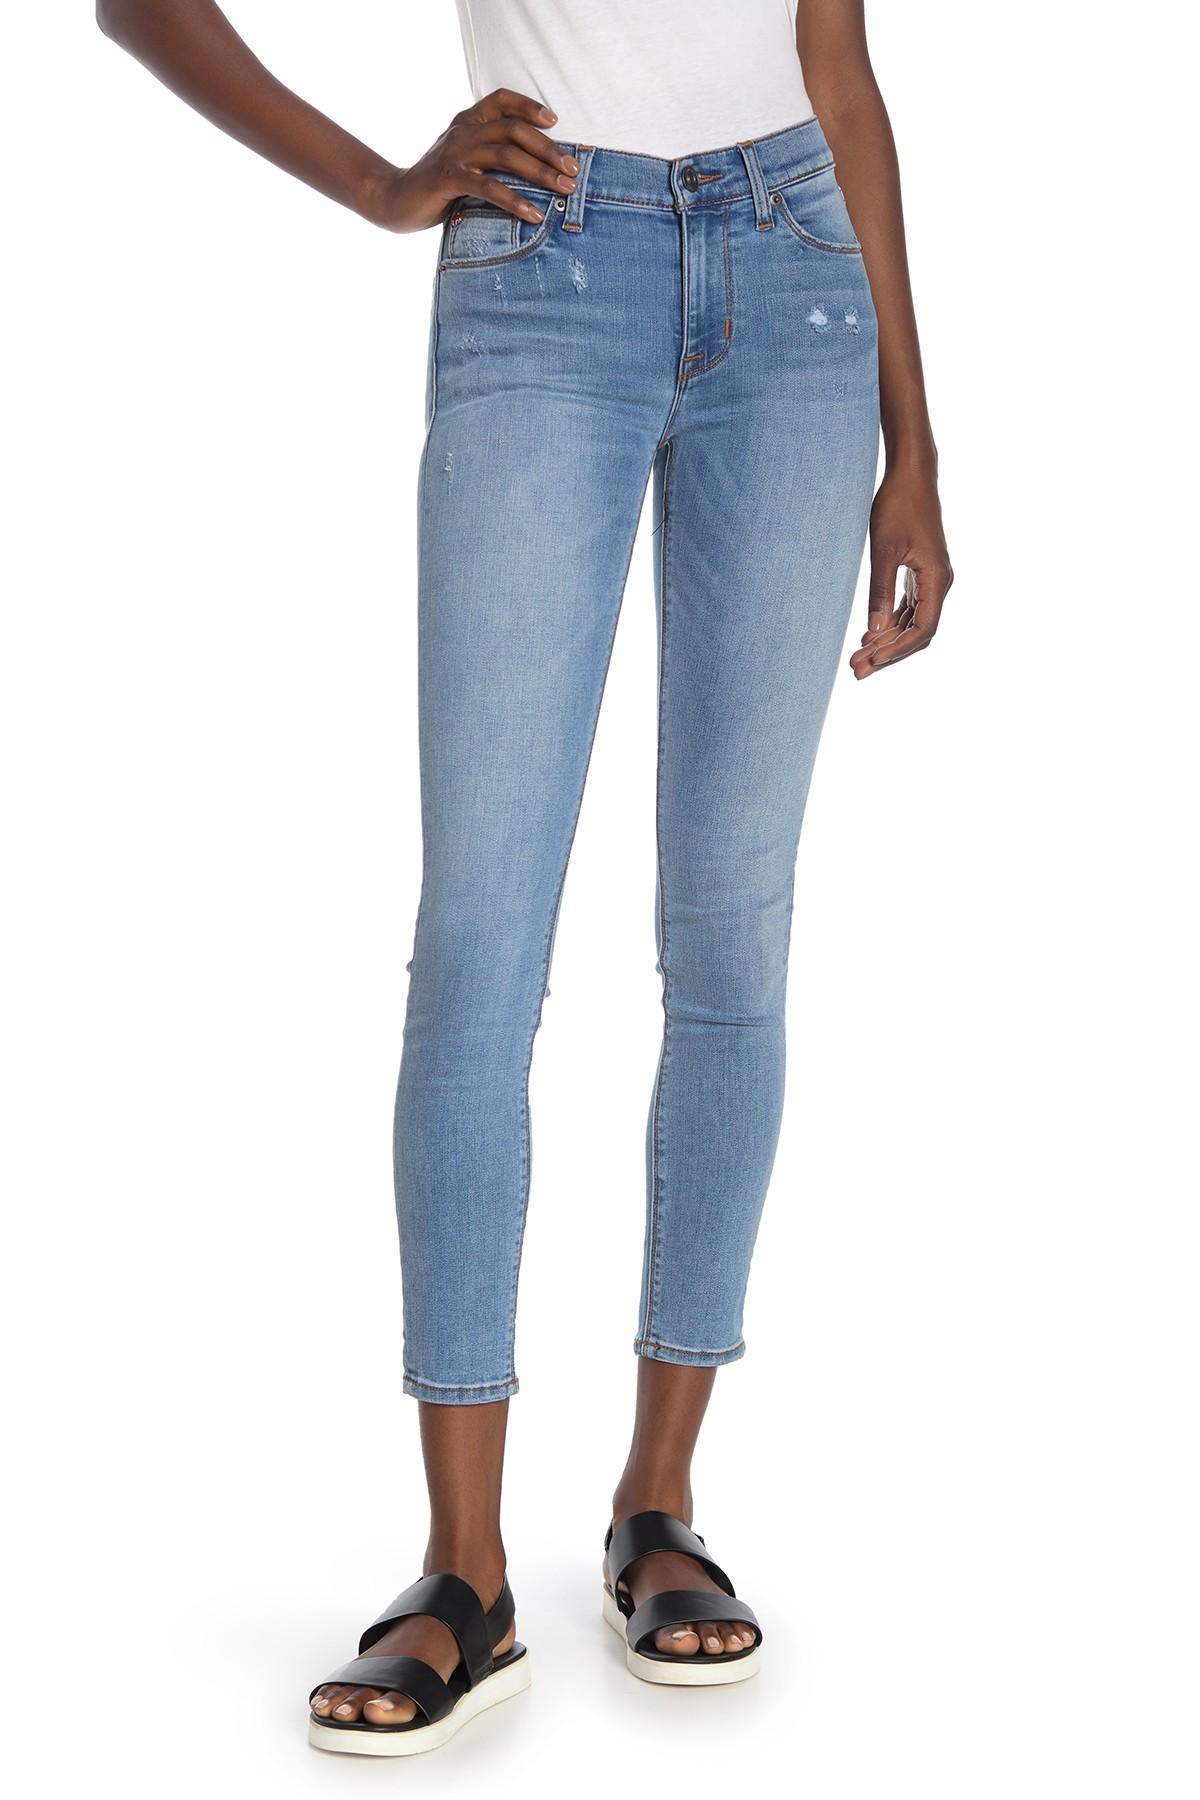 Lyst - Hudson Jeans Natalie Mid Rise Super Skinny Ankle Jeans in Blue